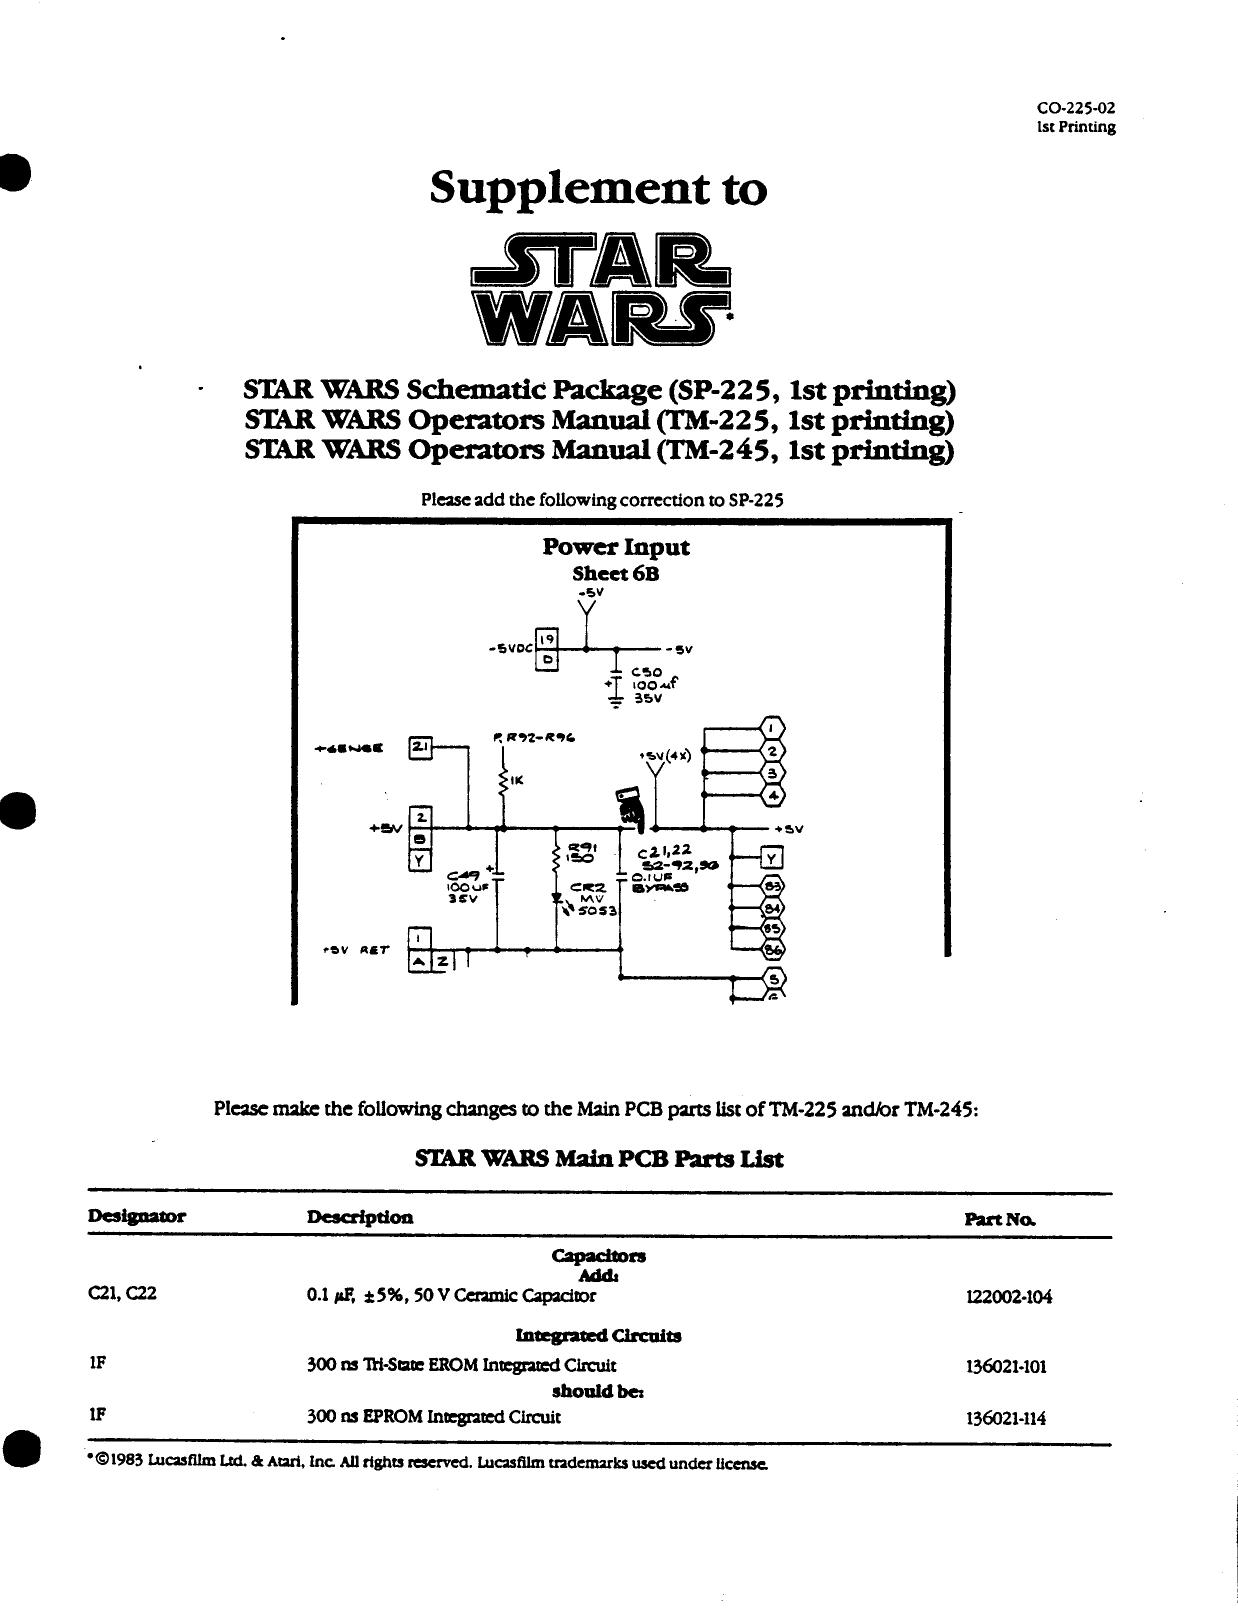 Star Wars CO-225-02 1st Printing